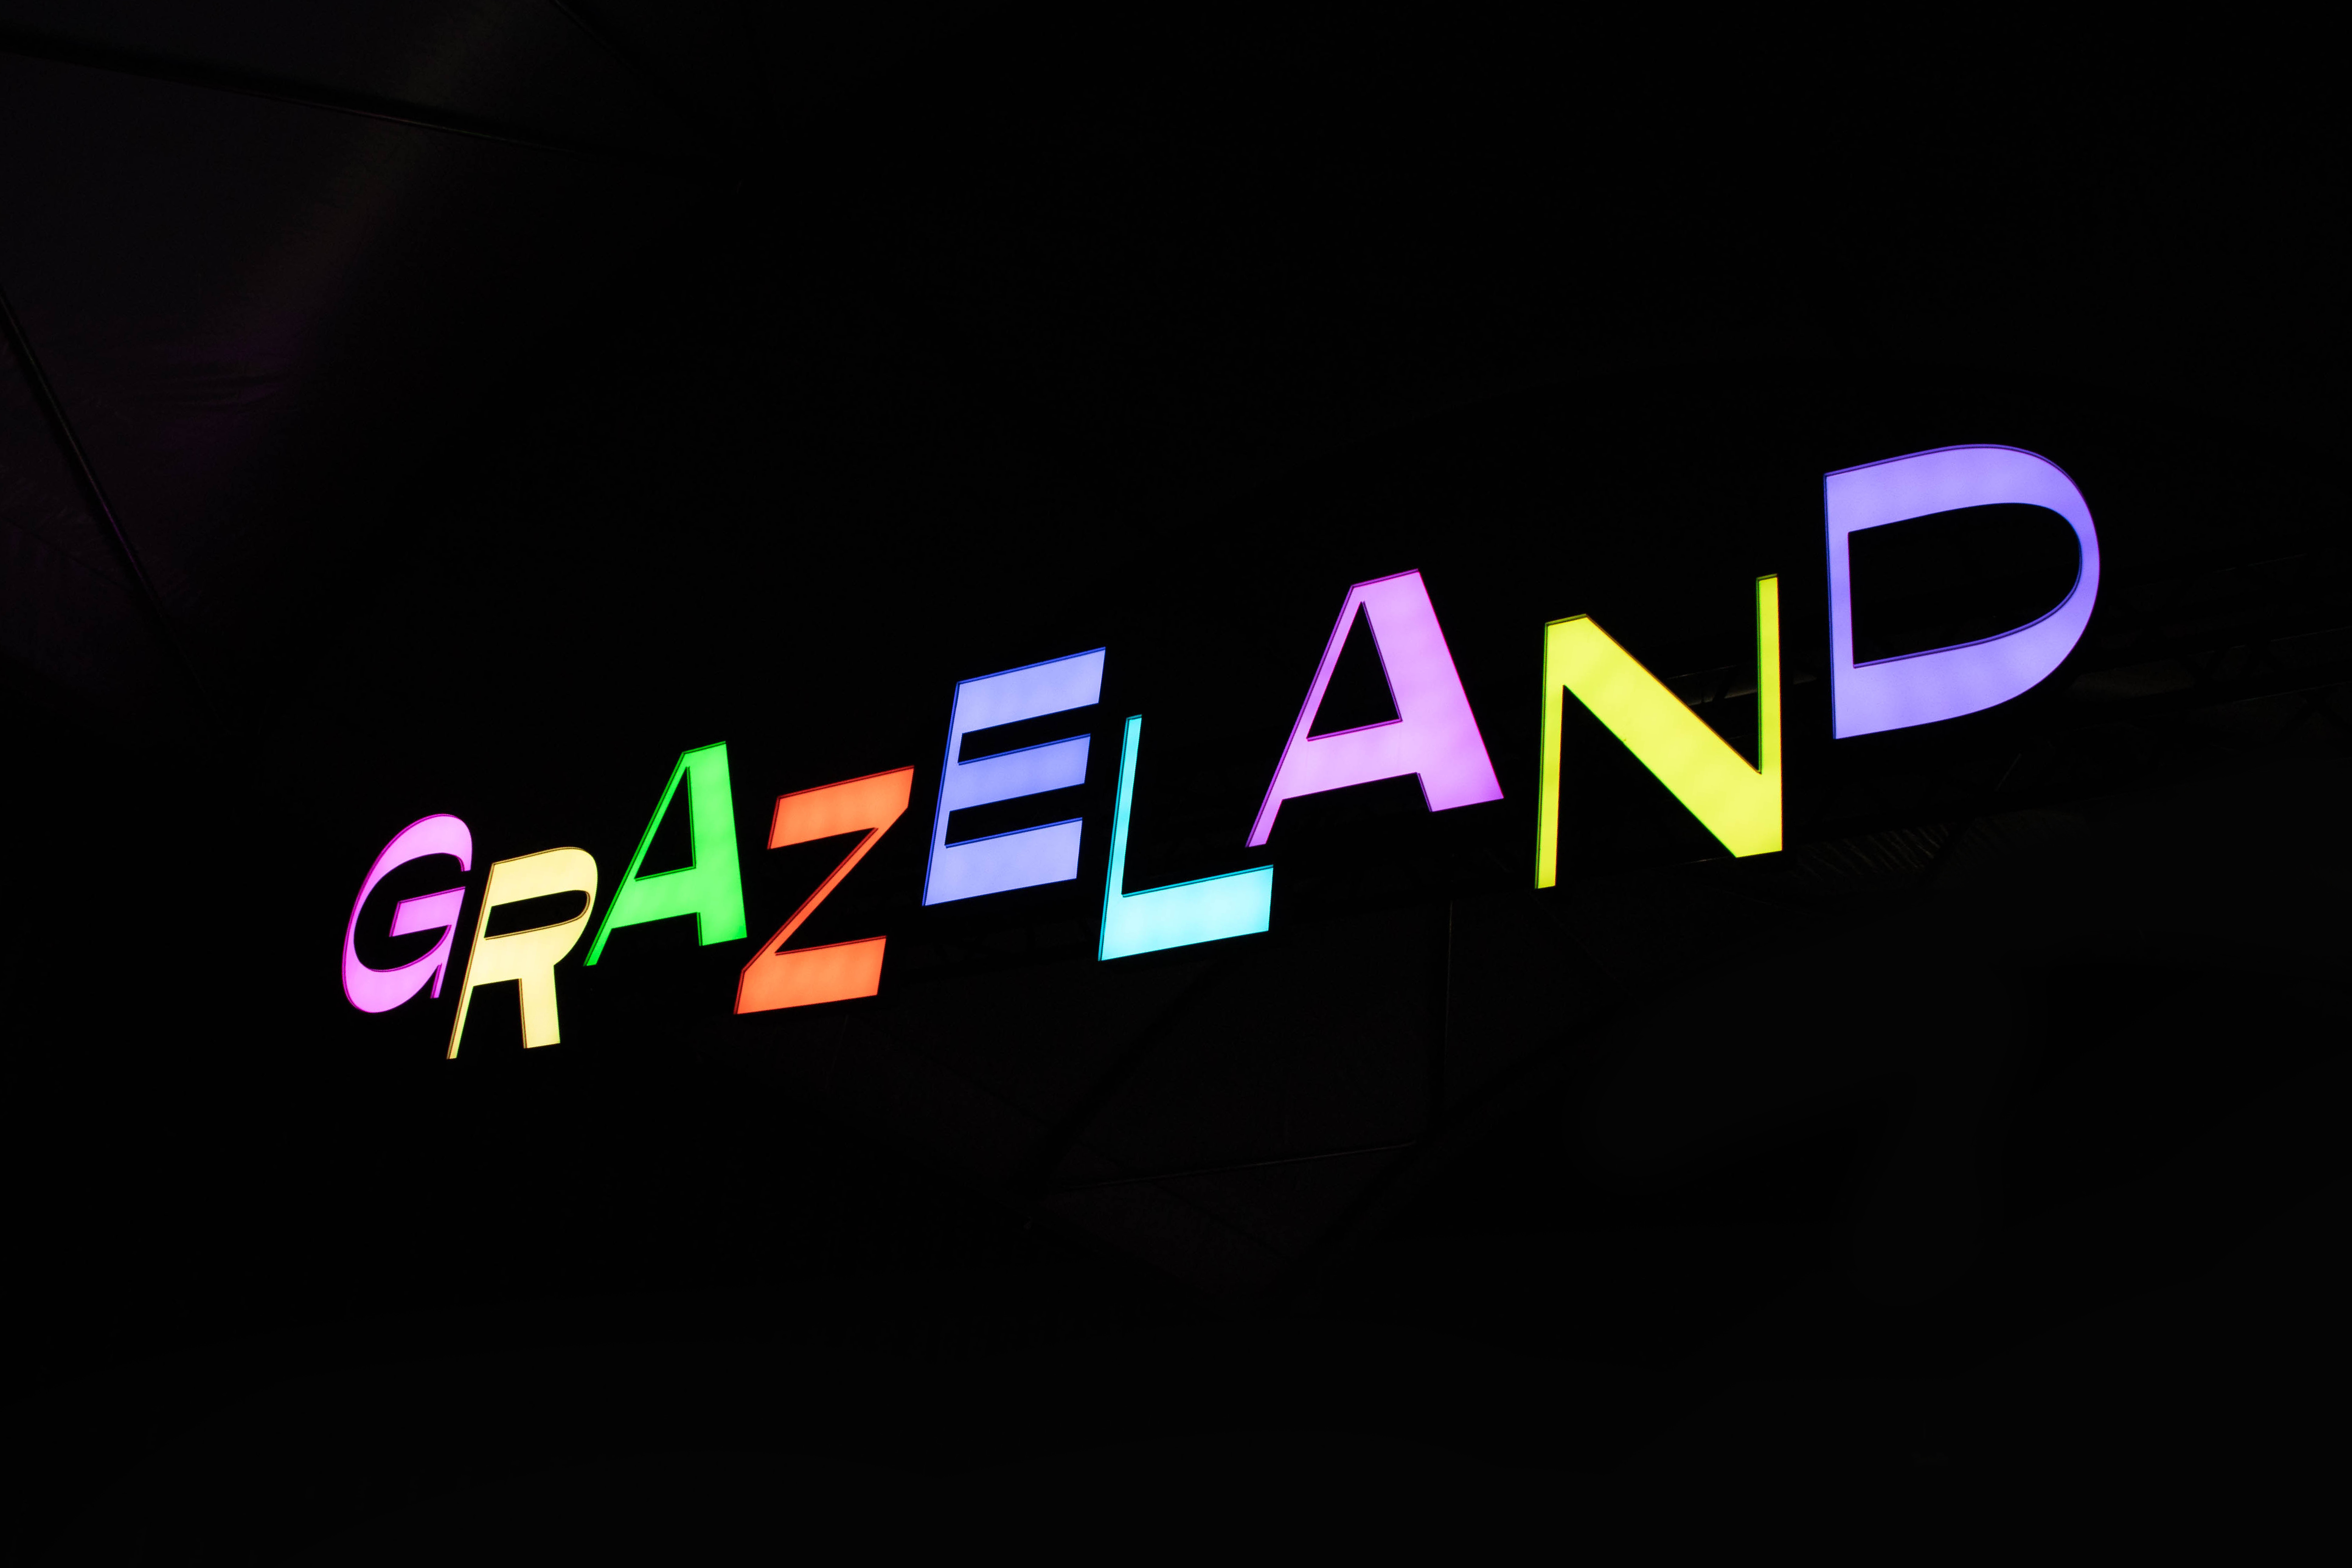 Grazeland-case-study2021-event